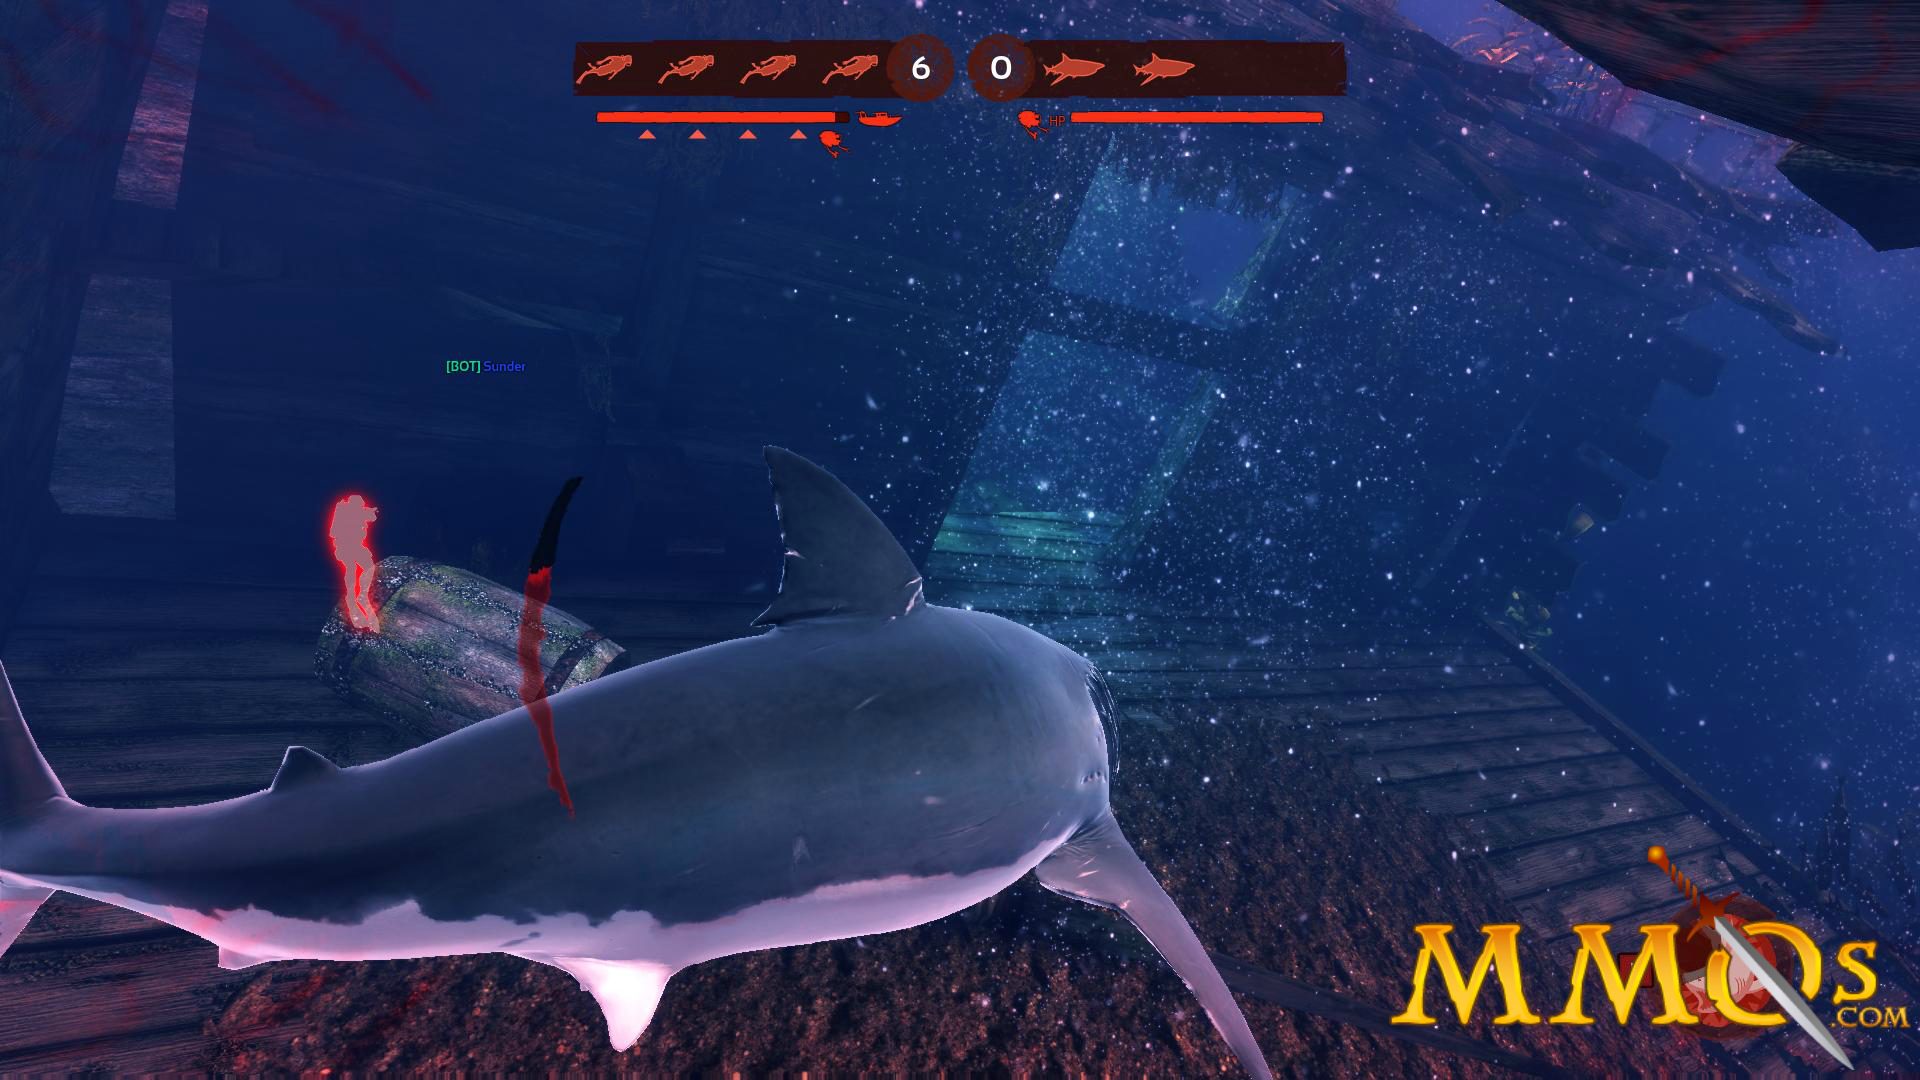 if u like shark games you should definitely get depth. It's